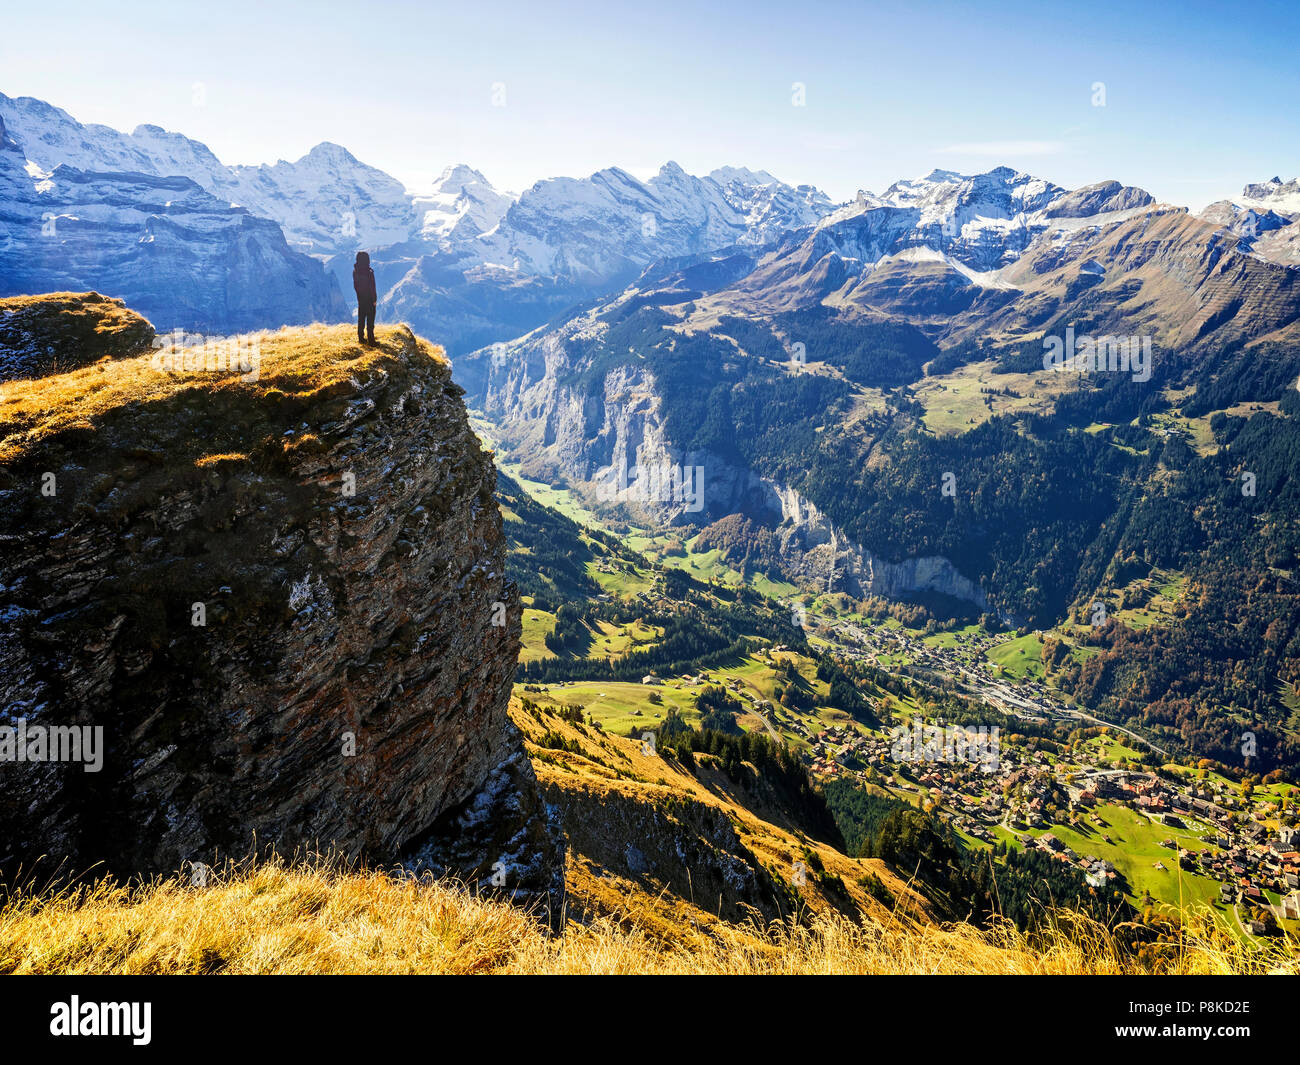 Standing over the Lauterbrunnen Valley Stock Photo